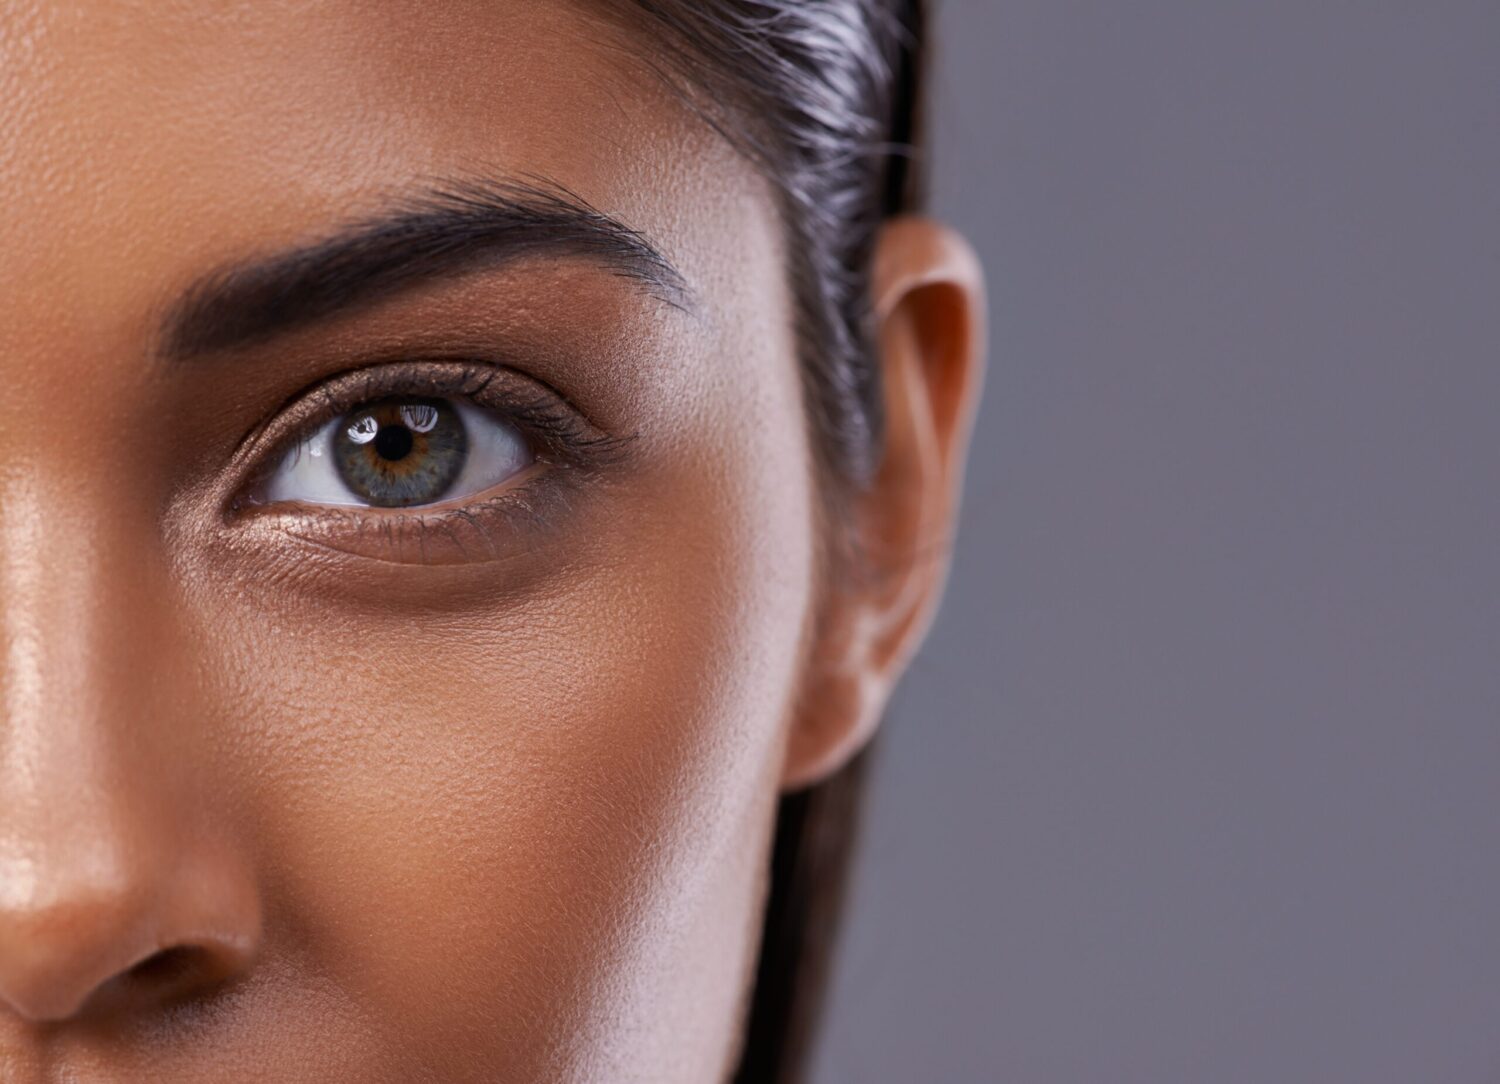 How To Get Rid Of Under Eye Wrinkles